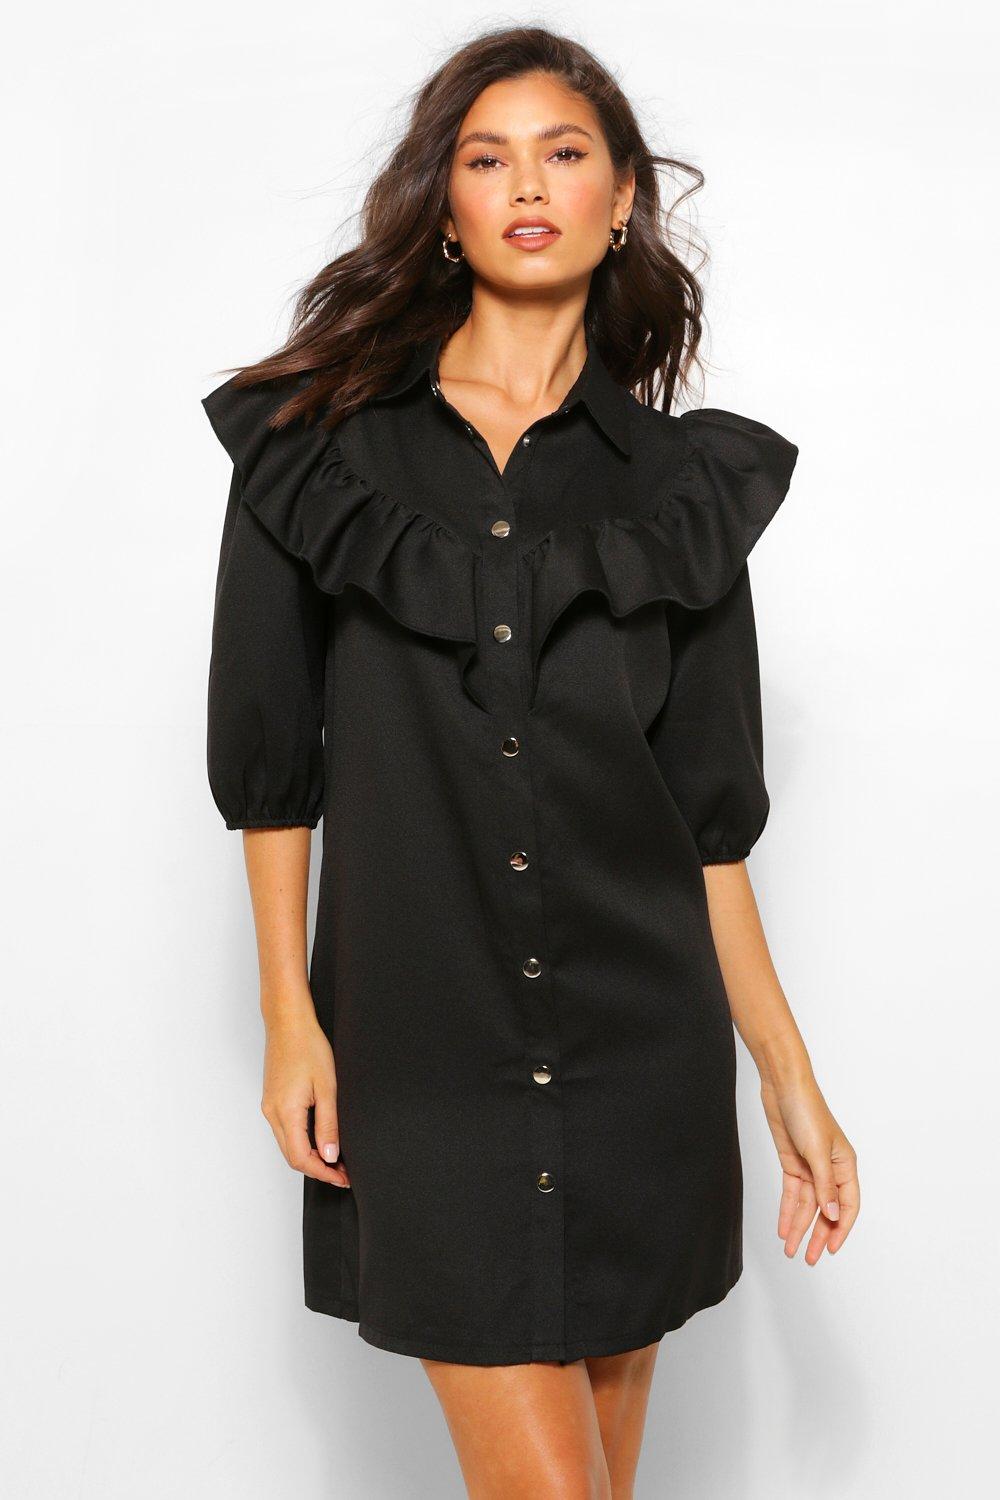 boohoo Womens Ruffle Sleeve Collared Shift Dress - Black - 14, Black